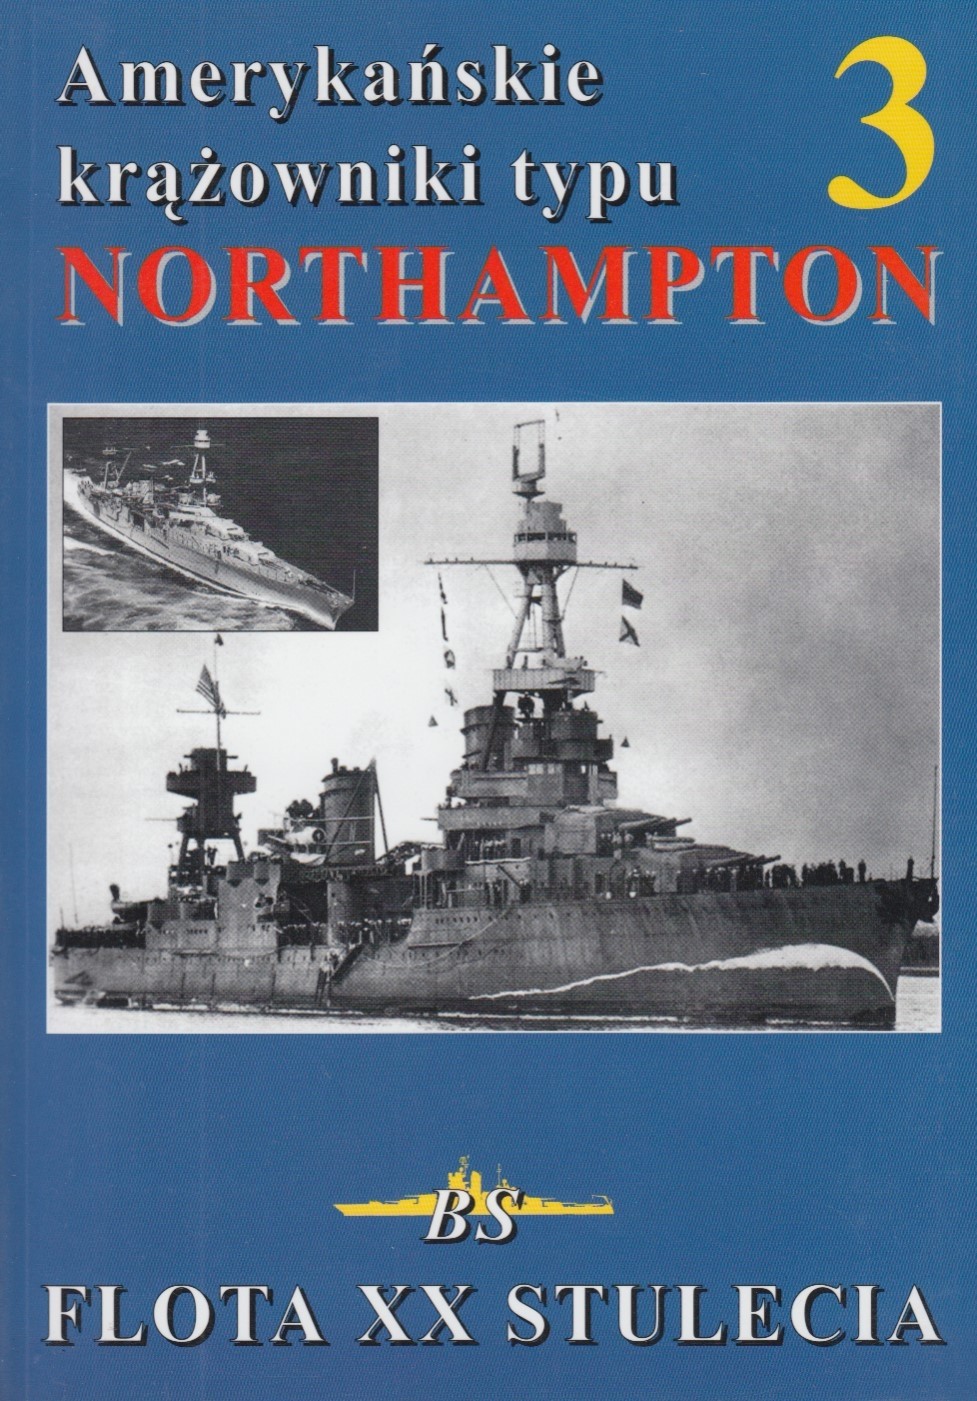 Destroyer USS NORTHAMPTON